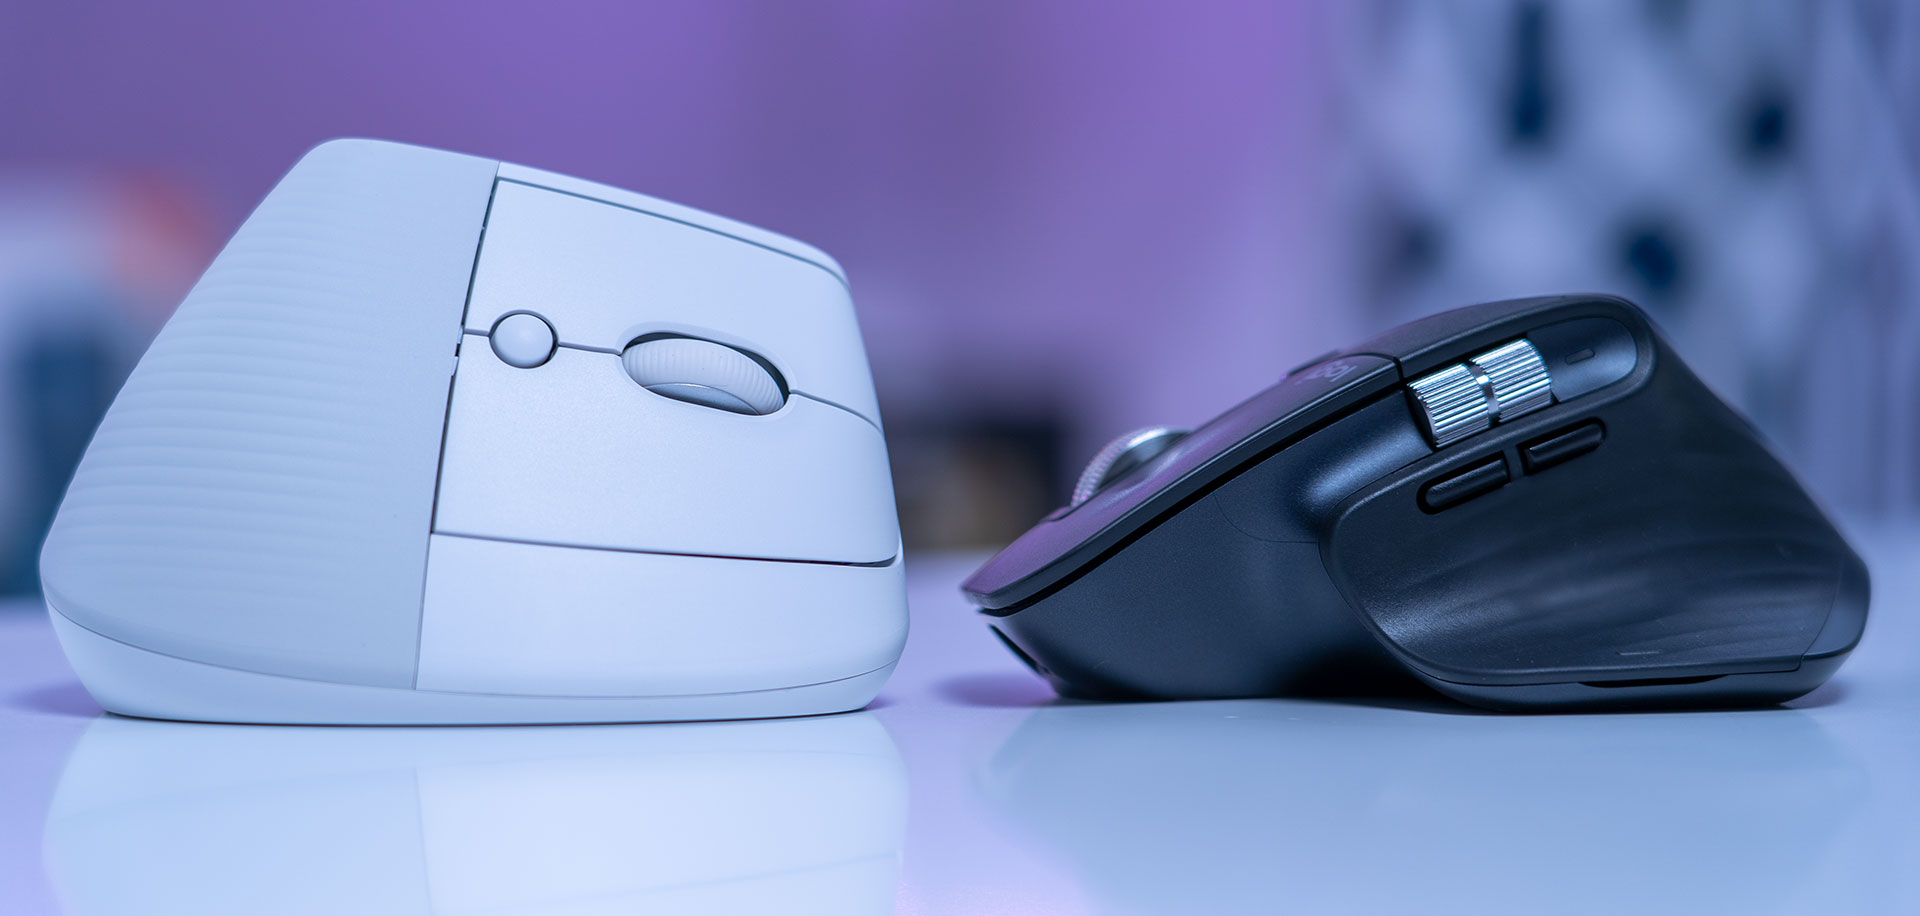 Hands-on review: Logitech Lift vertical ergonomic wireless mouse